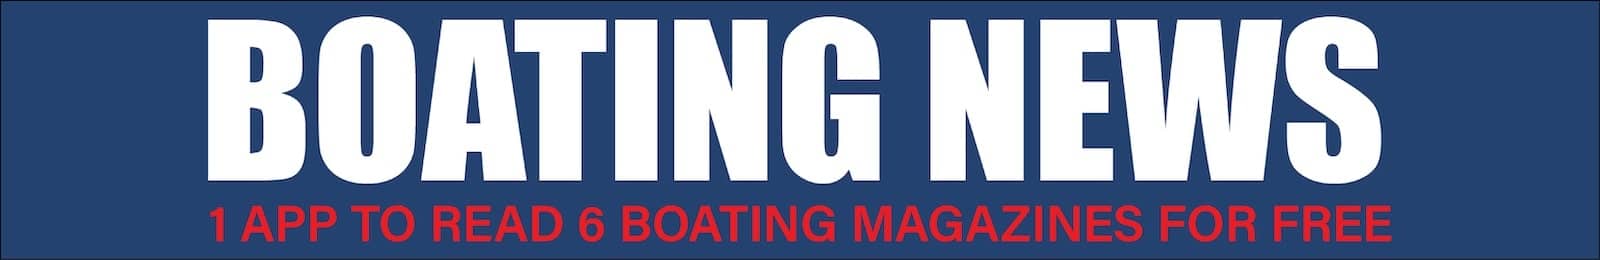 Boating News App Banner